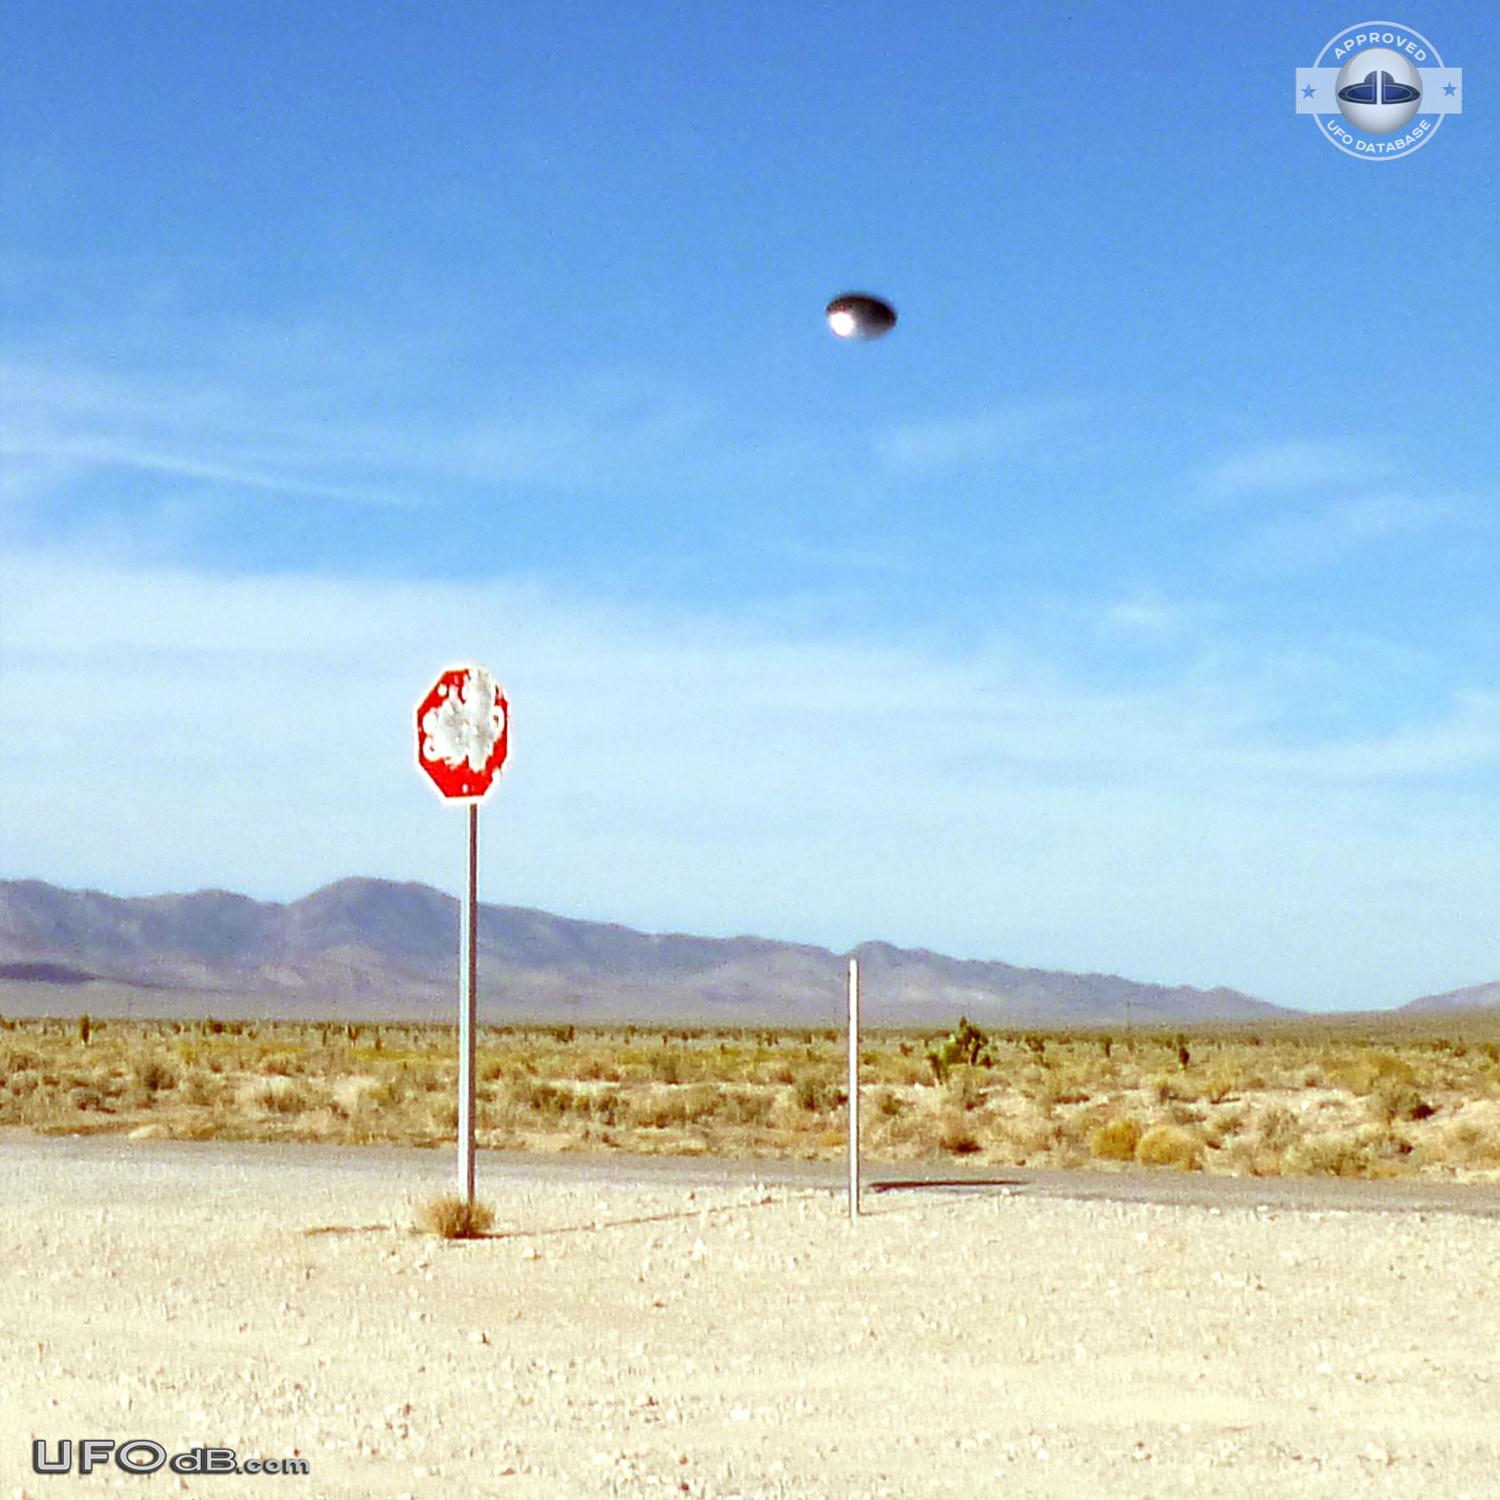 UFO saucer seen near Area 51 Black Mailbox near Rachel Nevada 2012 UFO Picture #526-3